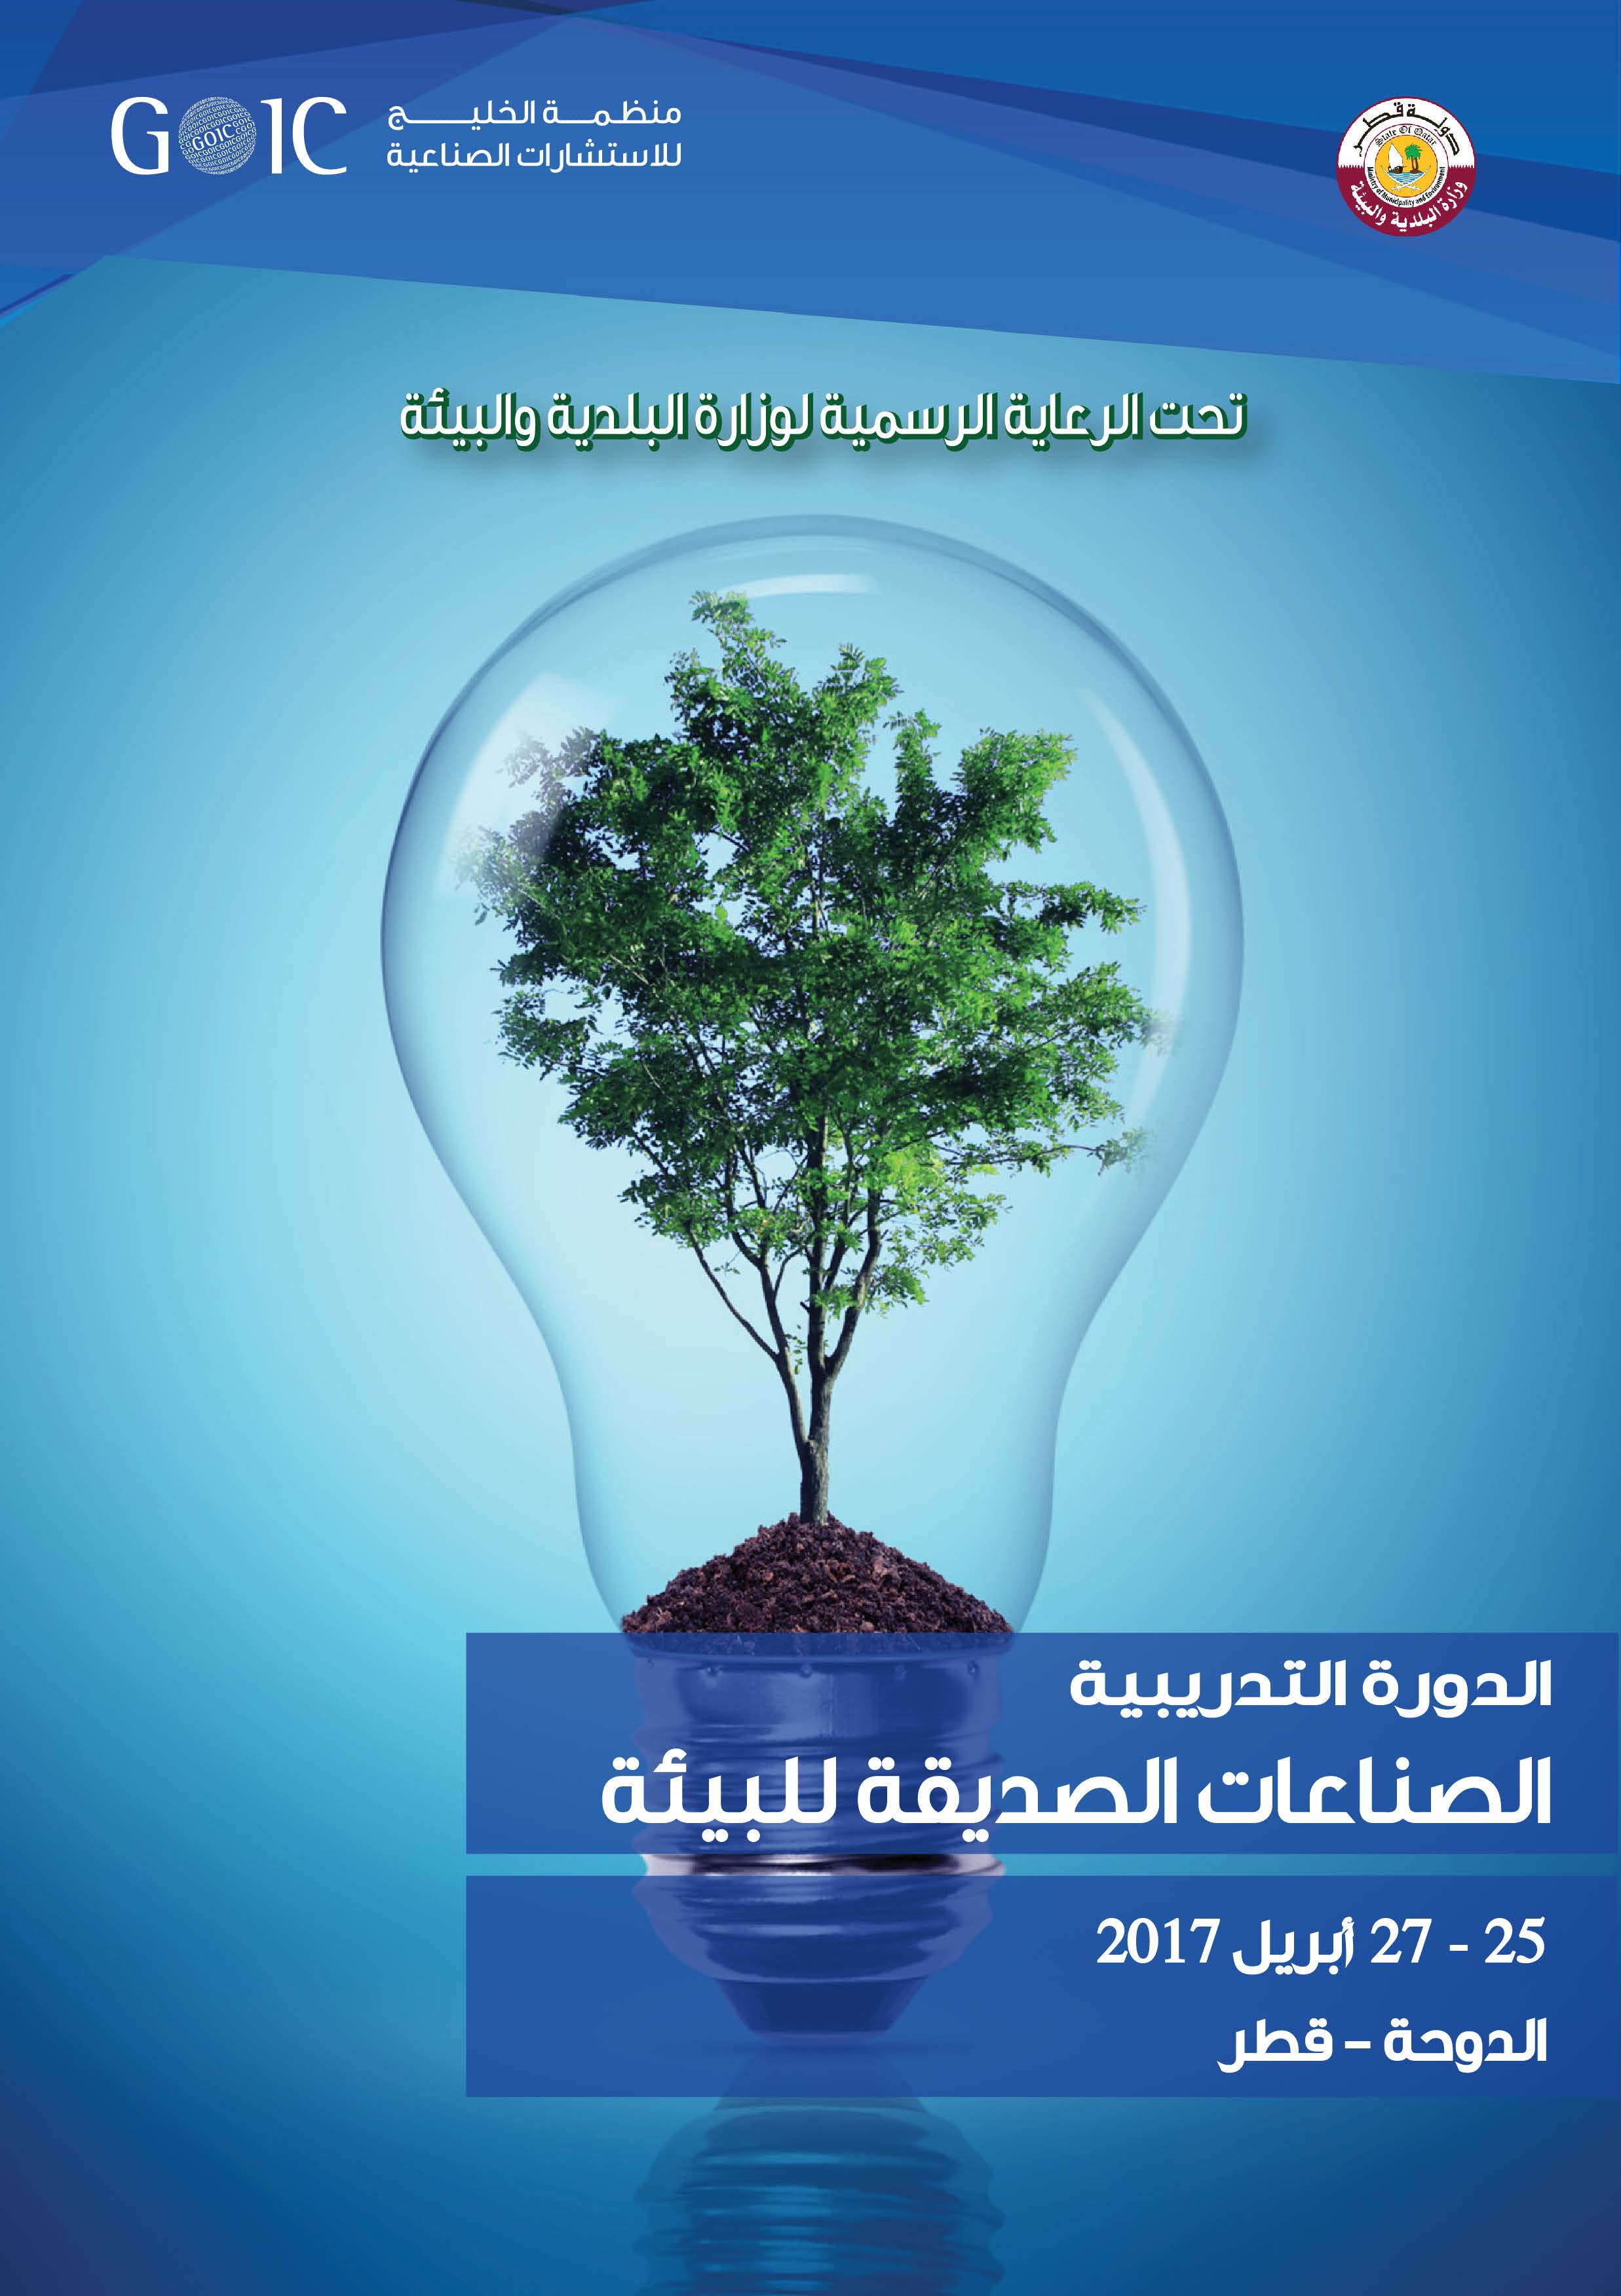 GOIC organizes a training on green industries